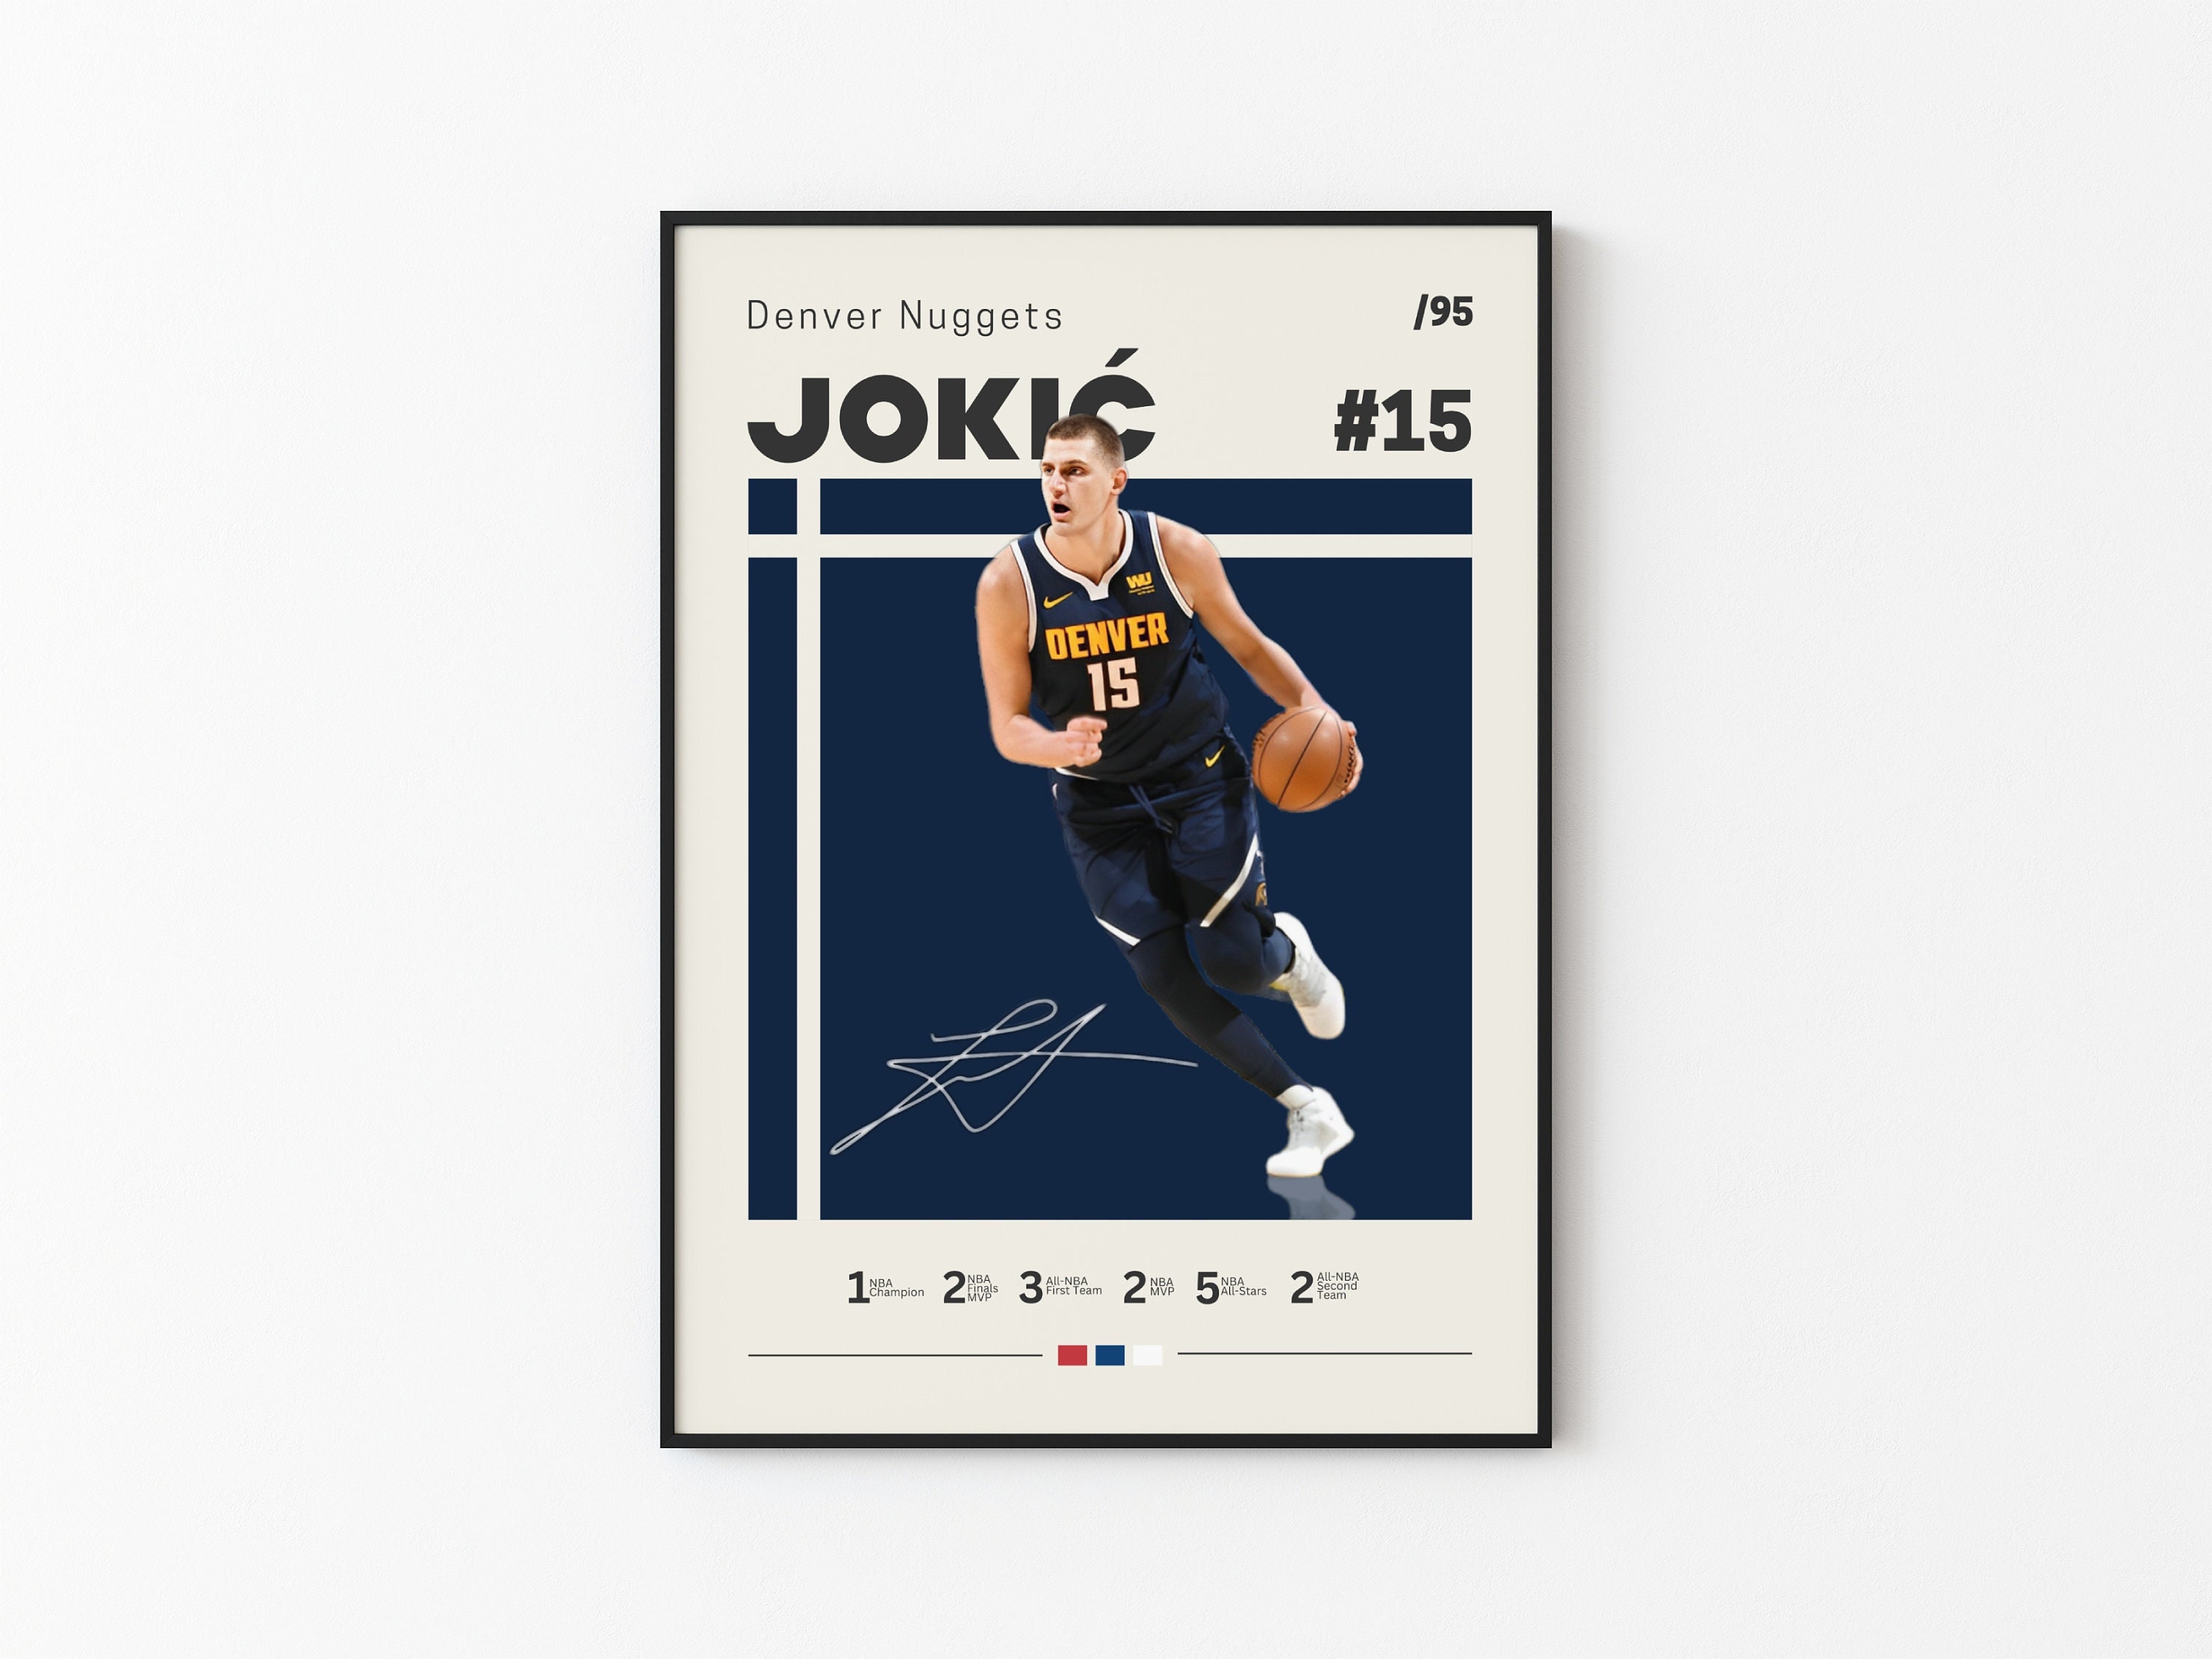 Nikola Jokic #15 Team Serbia Type Basketball Jersey Custom Name Printed  S-4XL